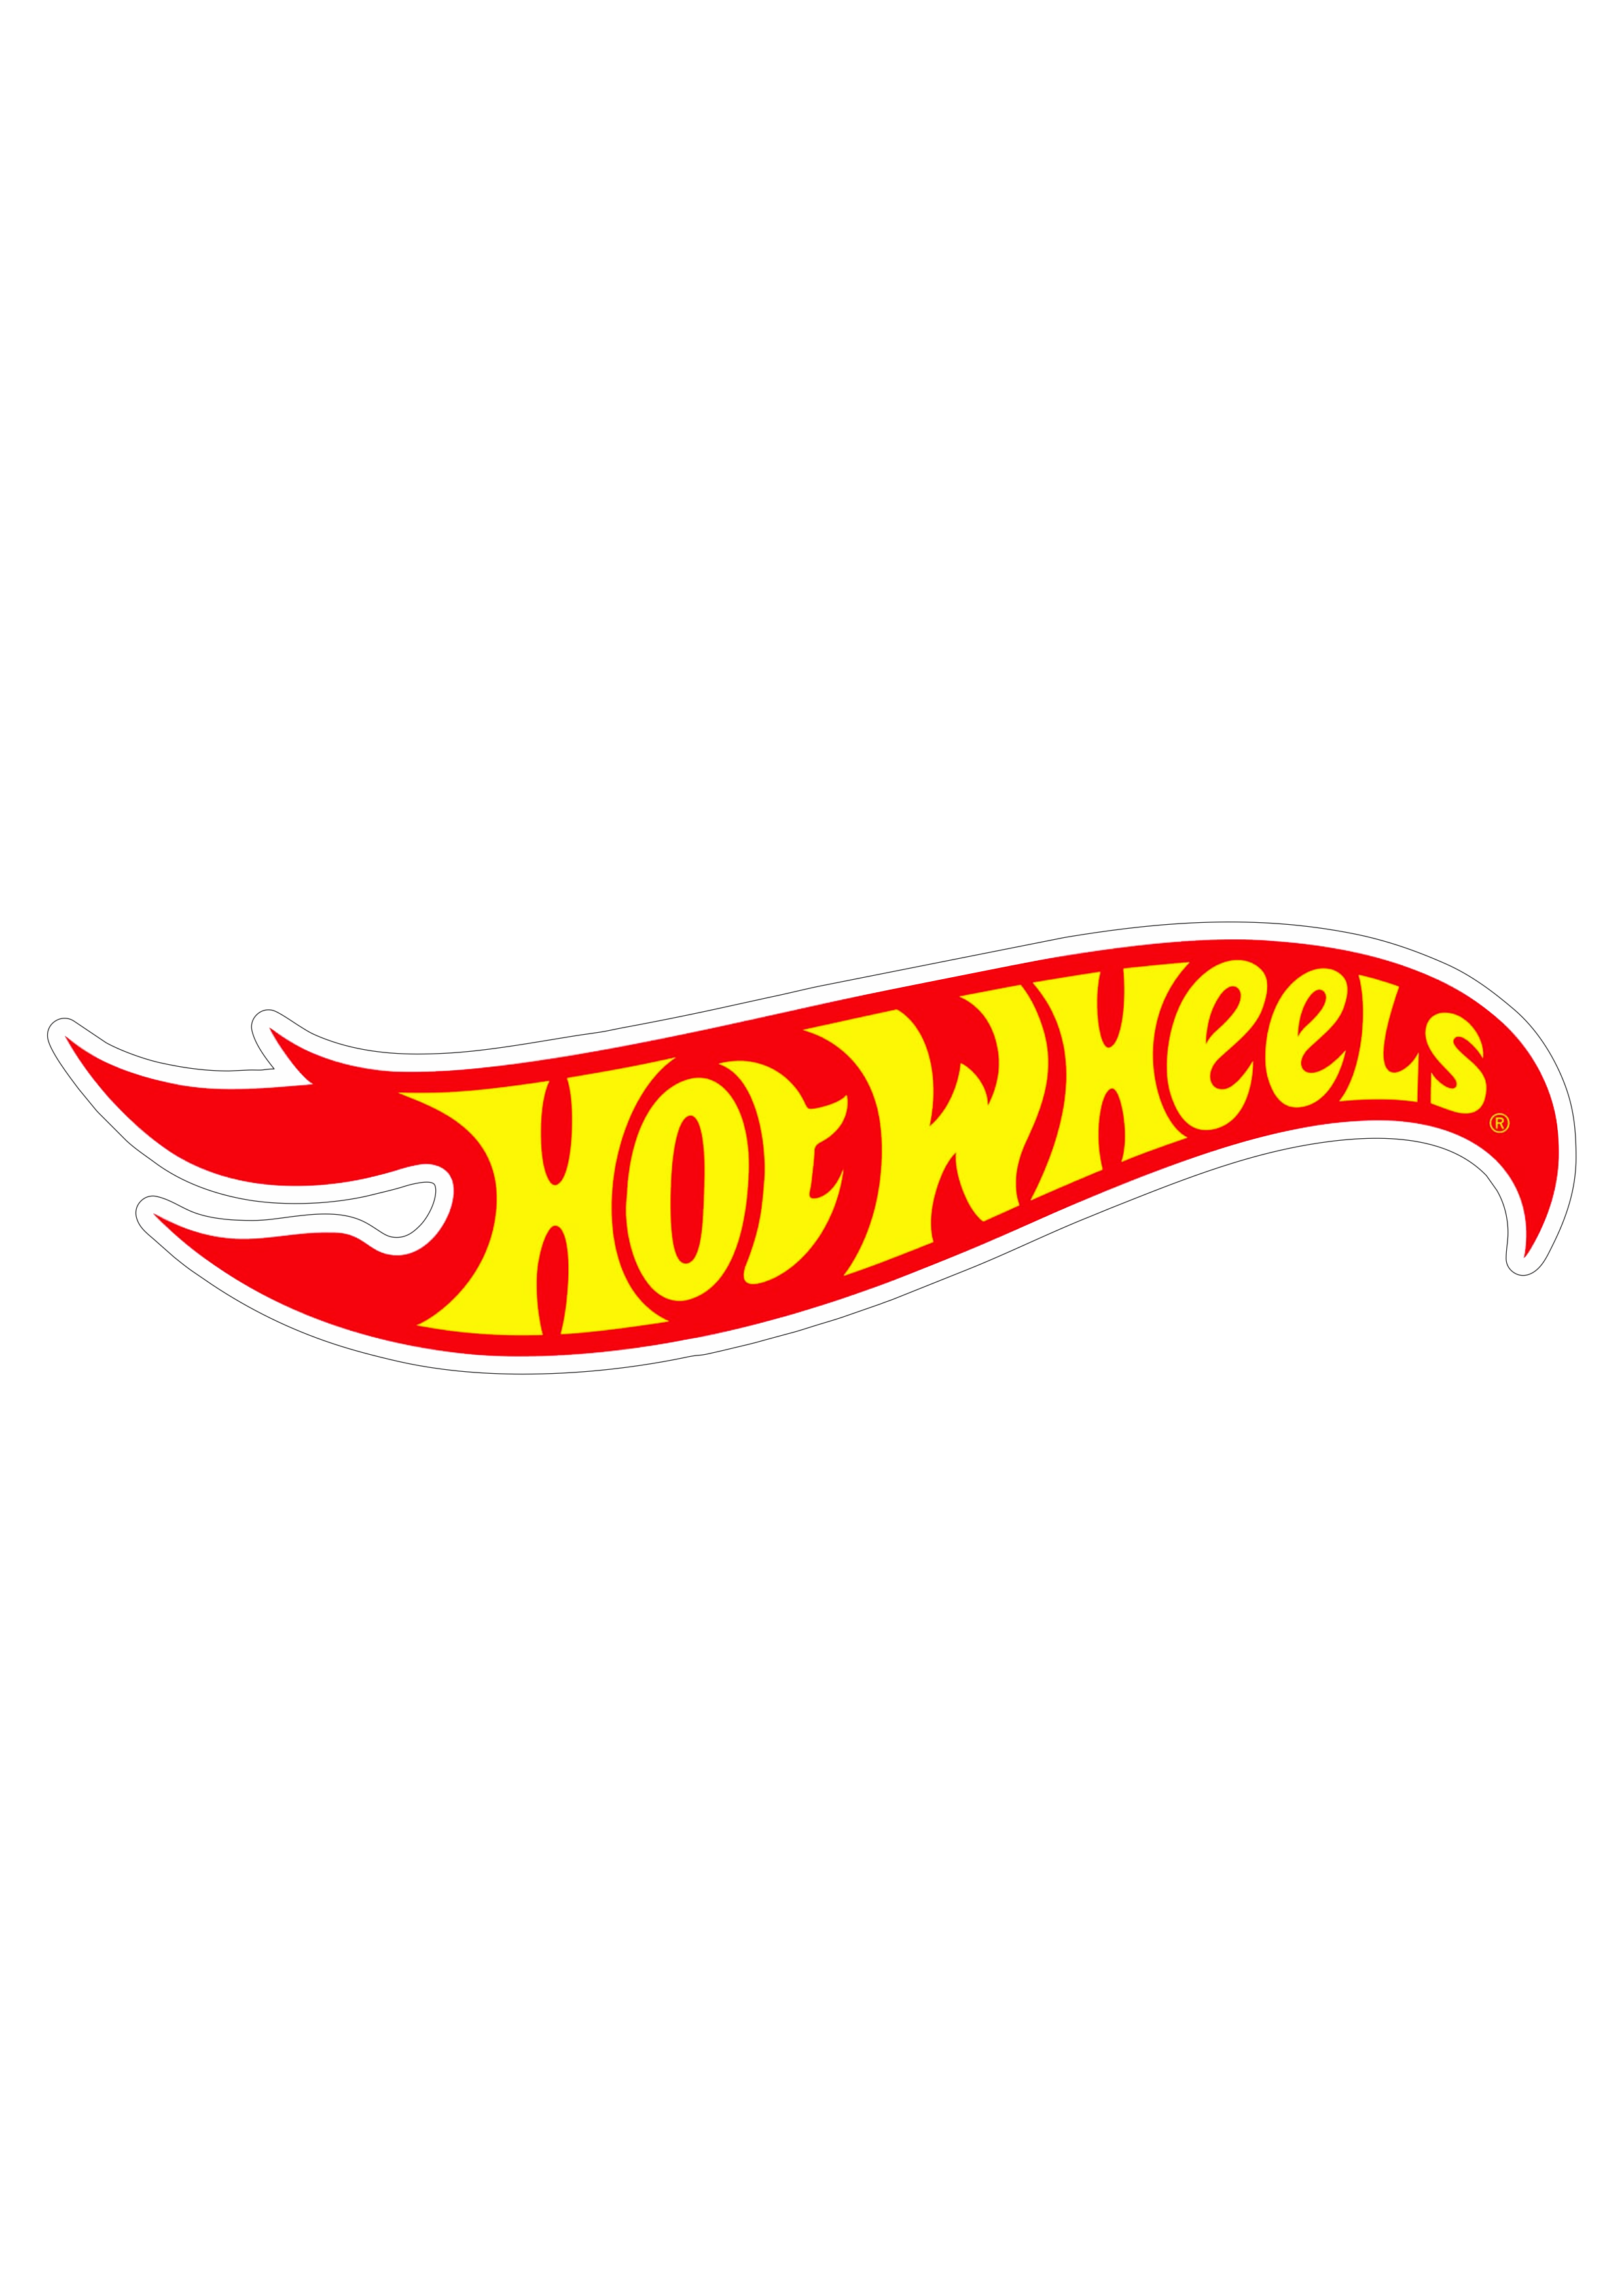 Hot Wheels logo png